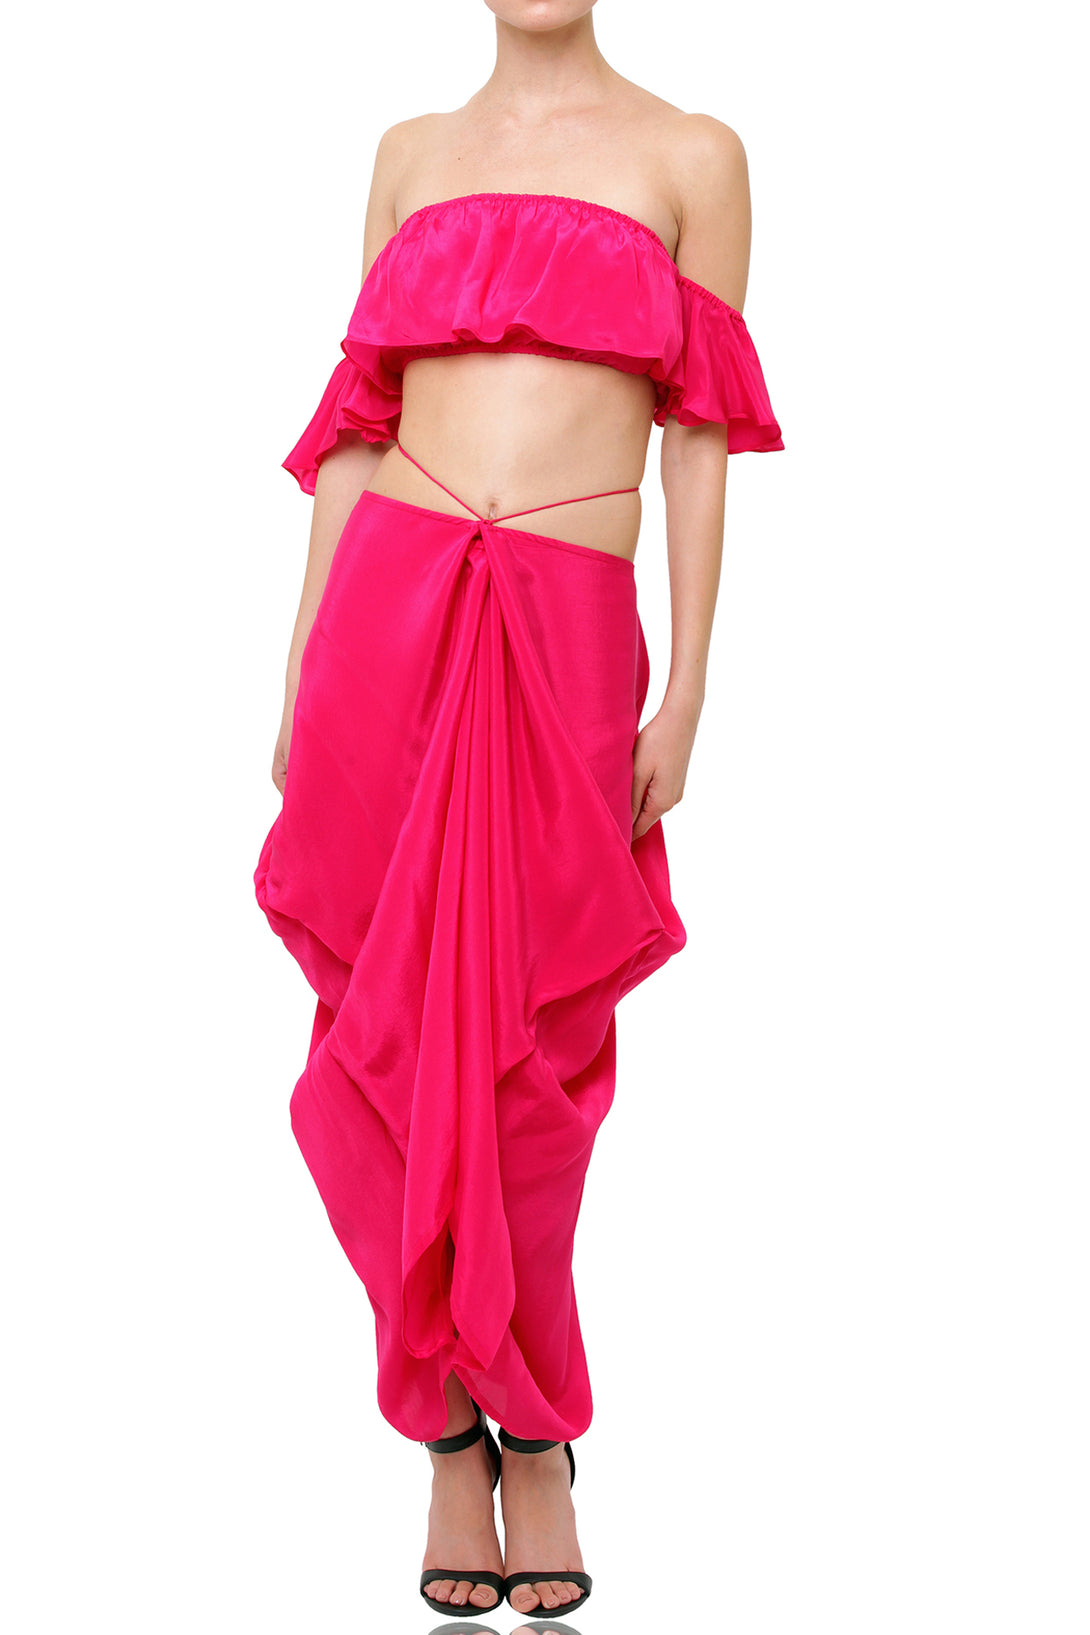  hot pink short dress, Shahida Parides, silk caftans,short sleeveless summer dresses, cute mini dresses,